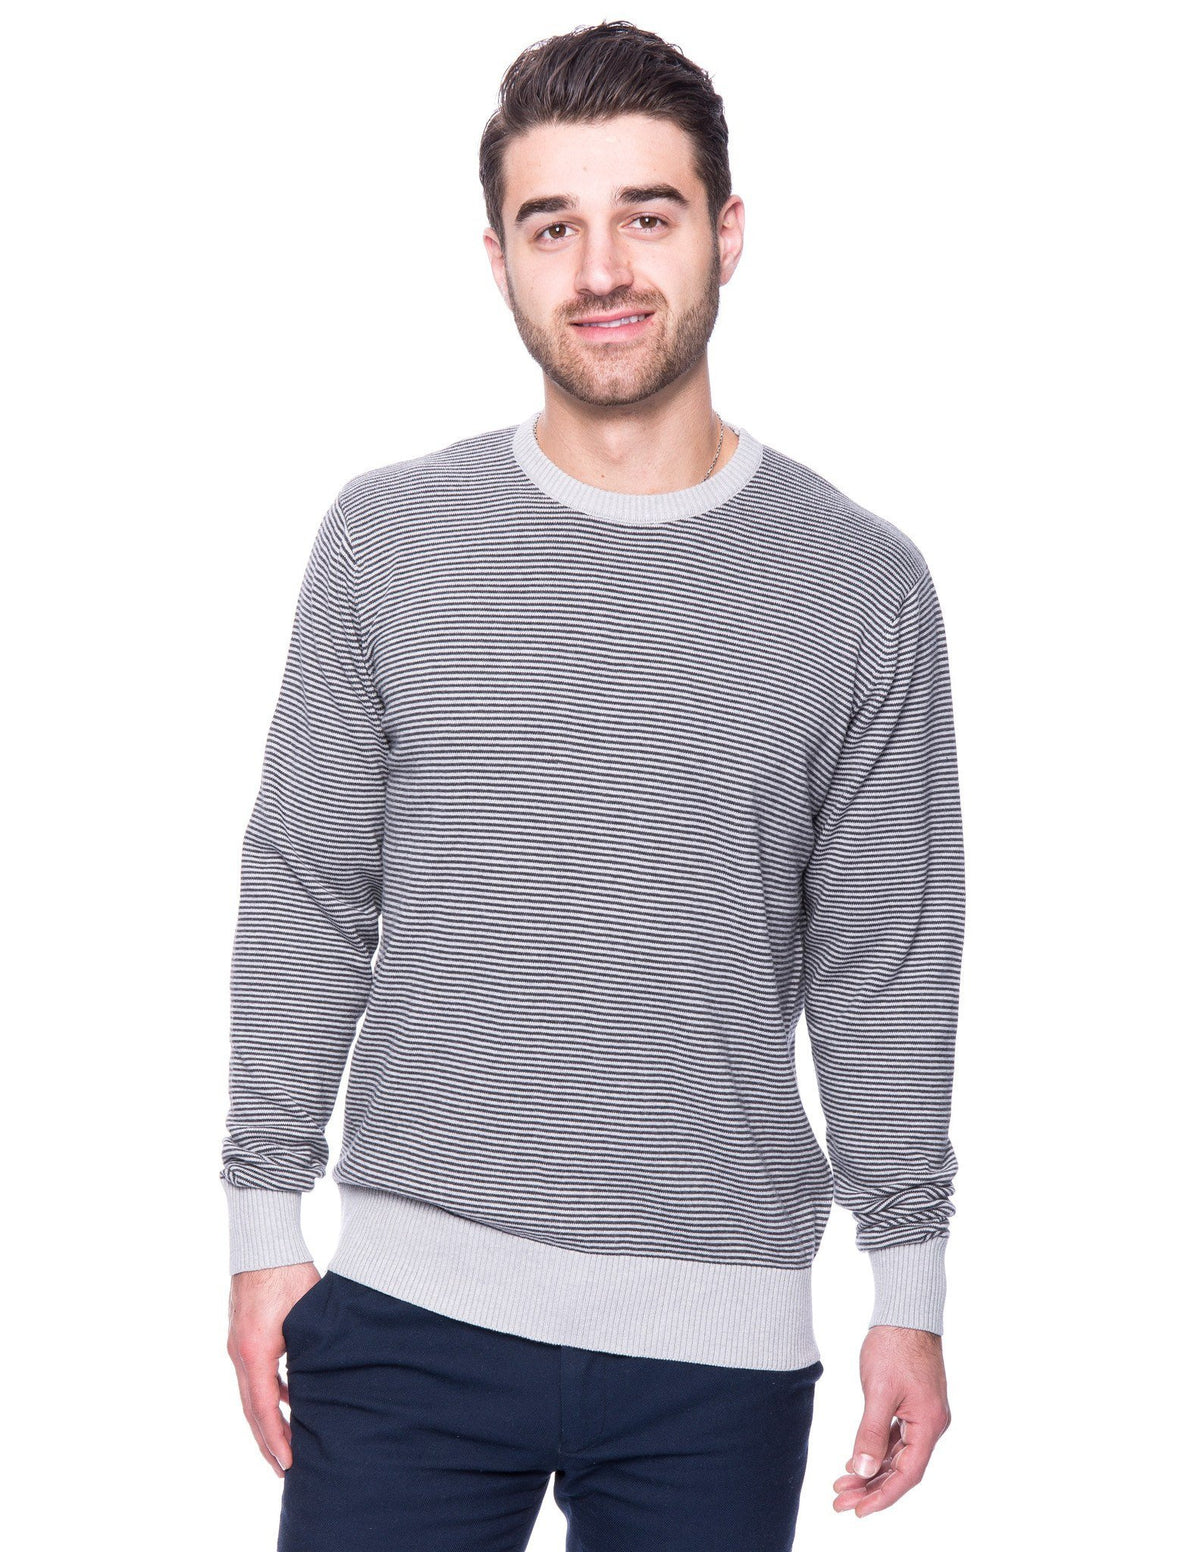 Men's Premium 100% Cotton Crew Neck Sweater - Stripes Heather Grey/Charcoal